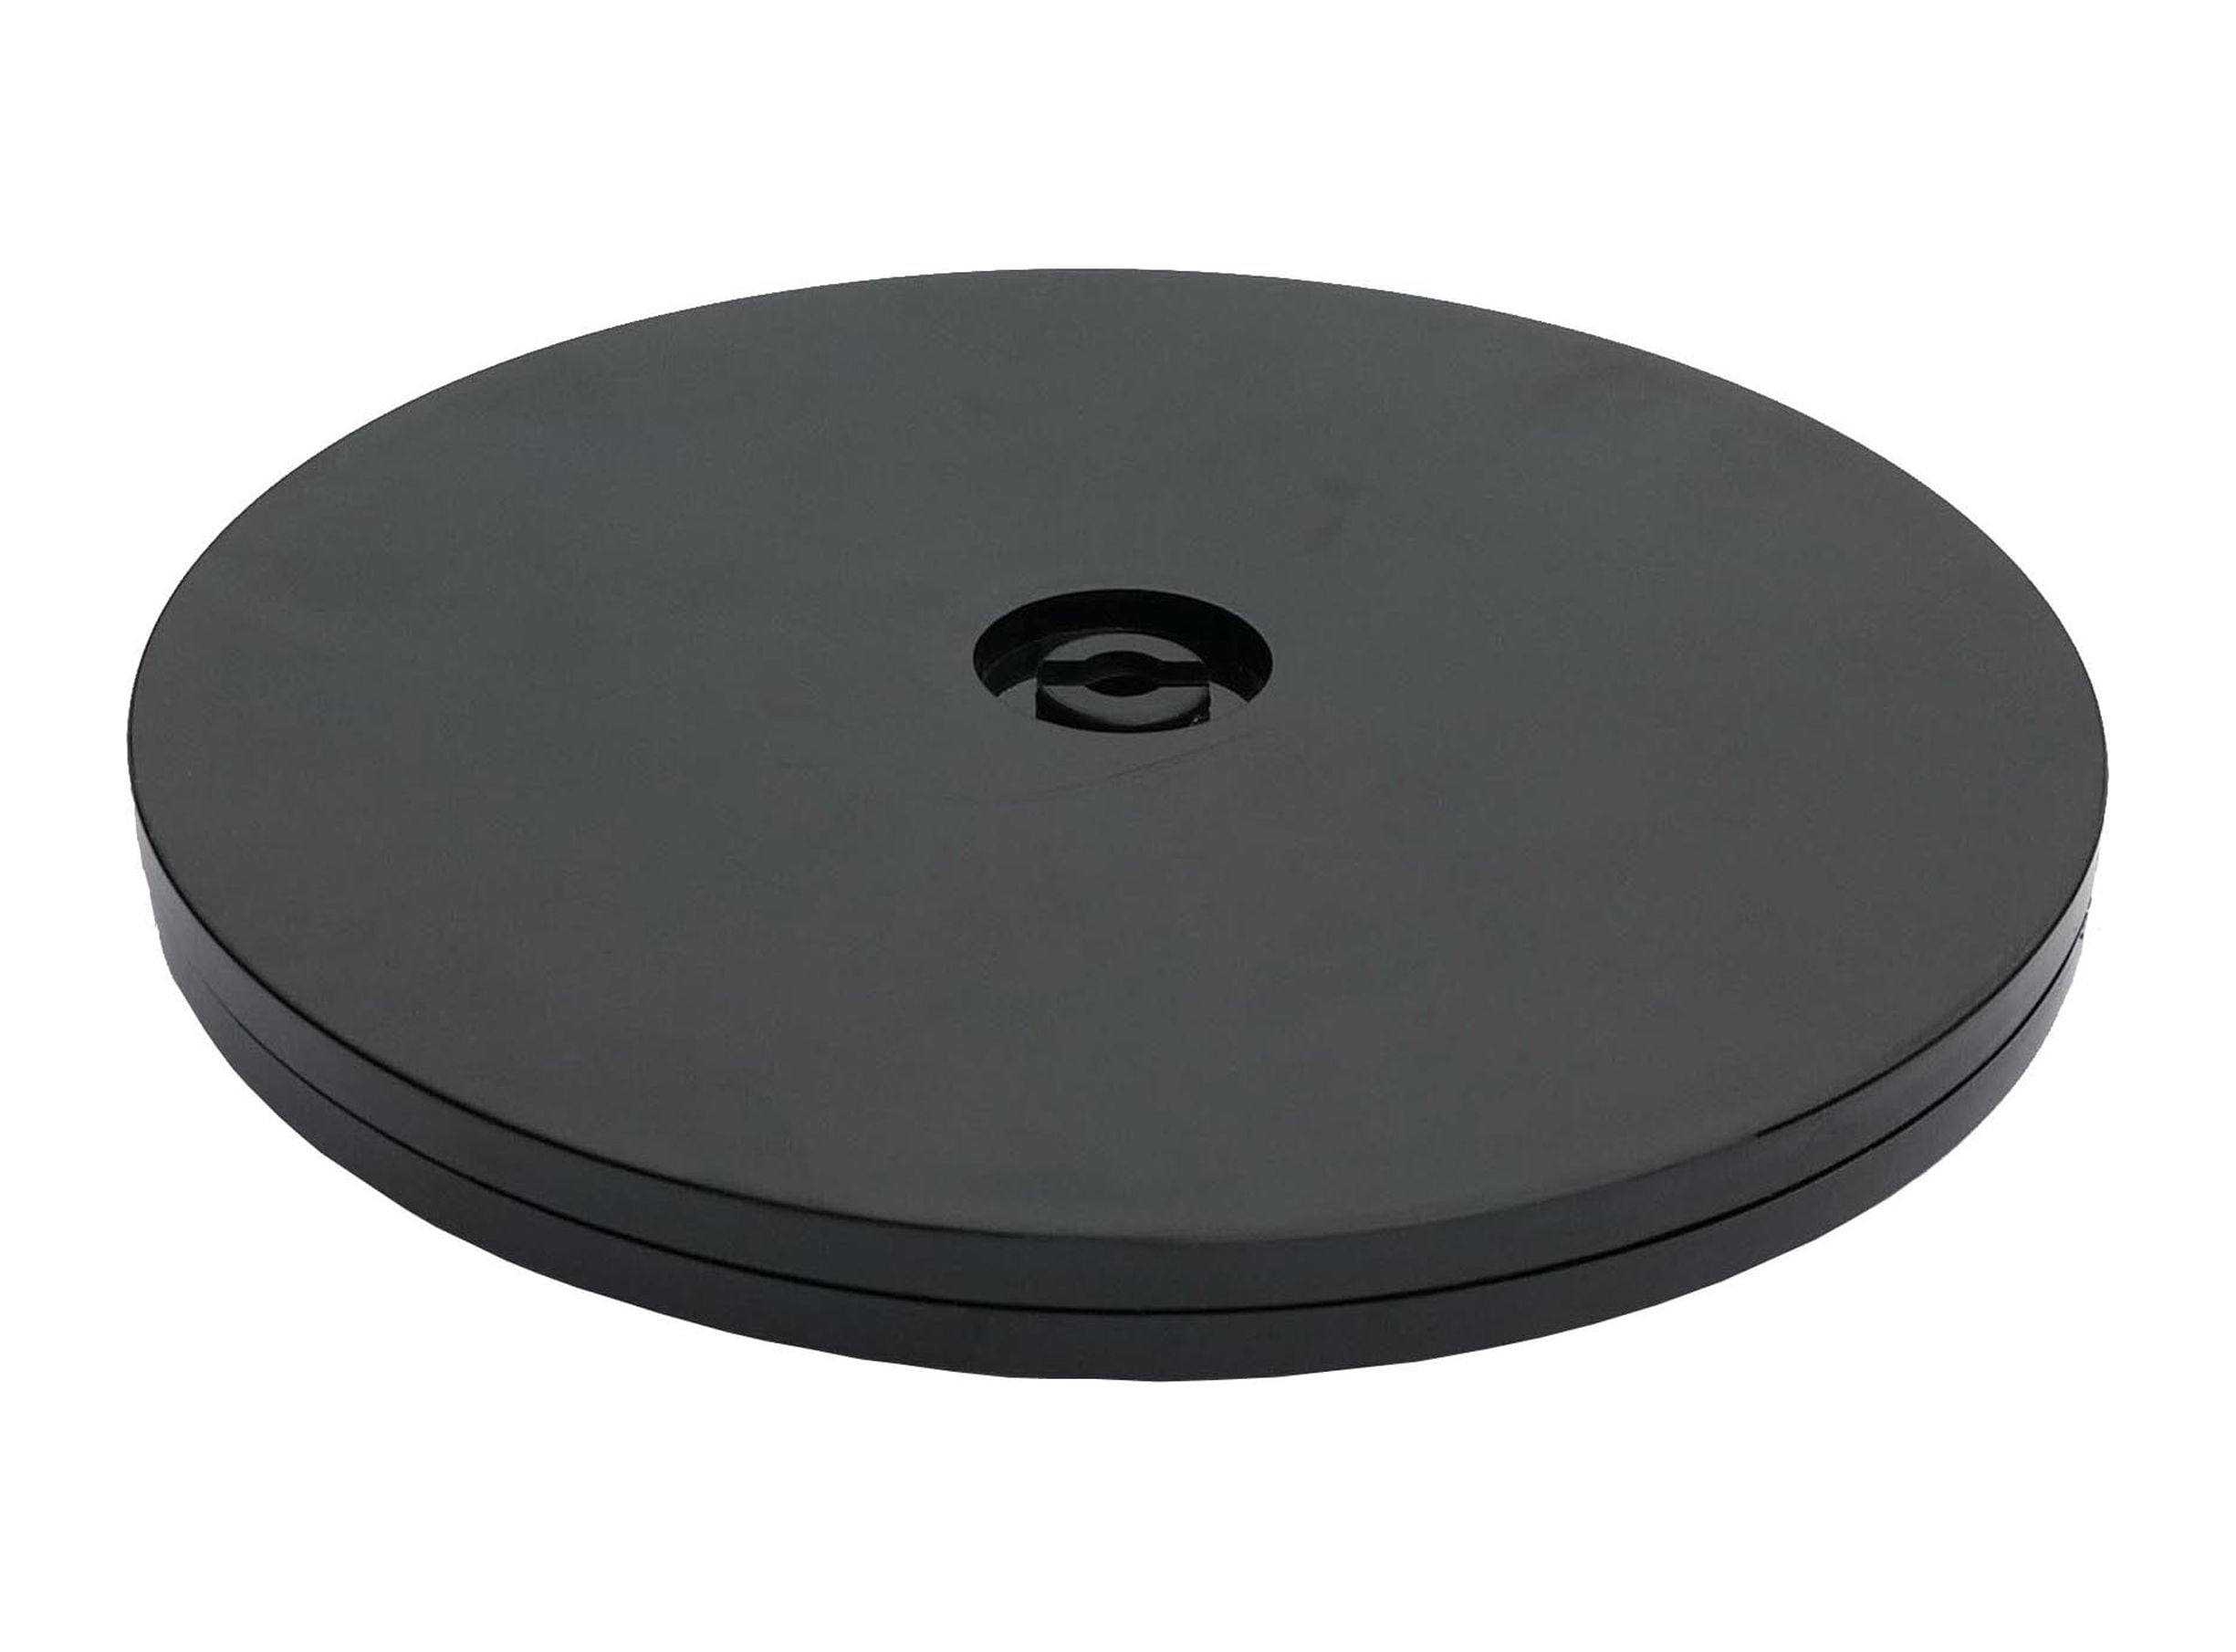 Powered rotating base display 45 cm black lazy susan